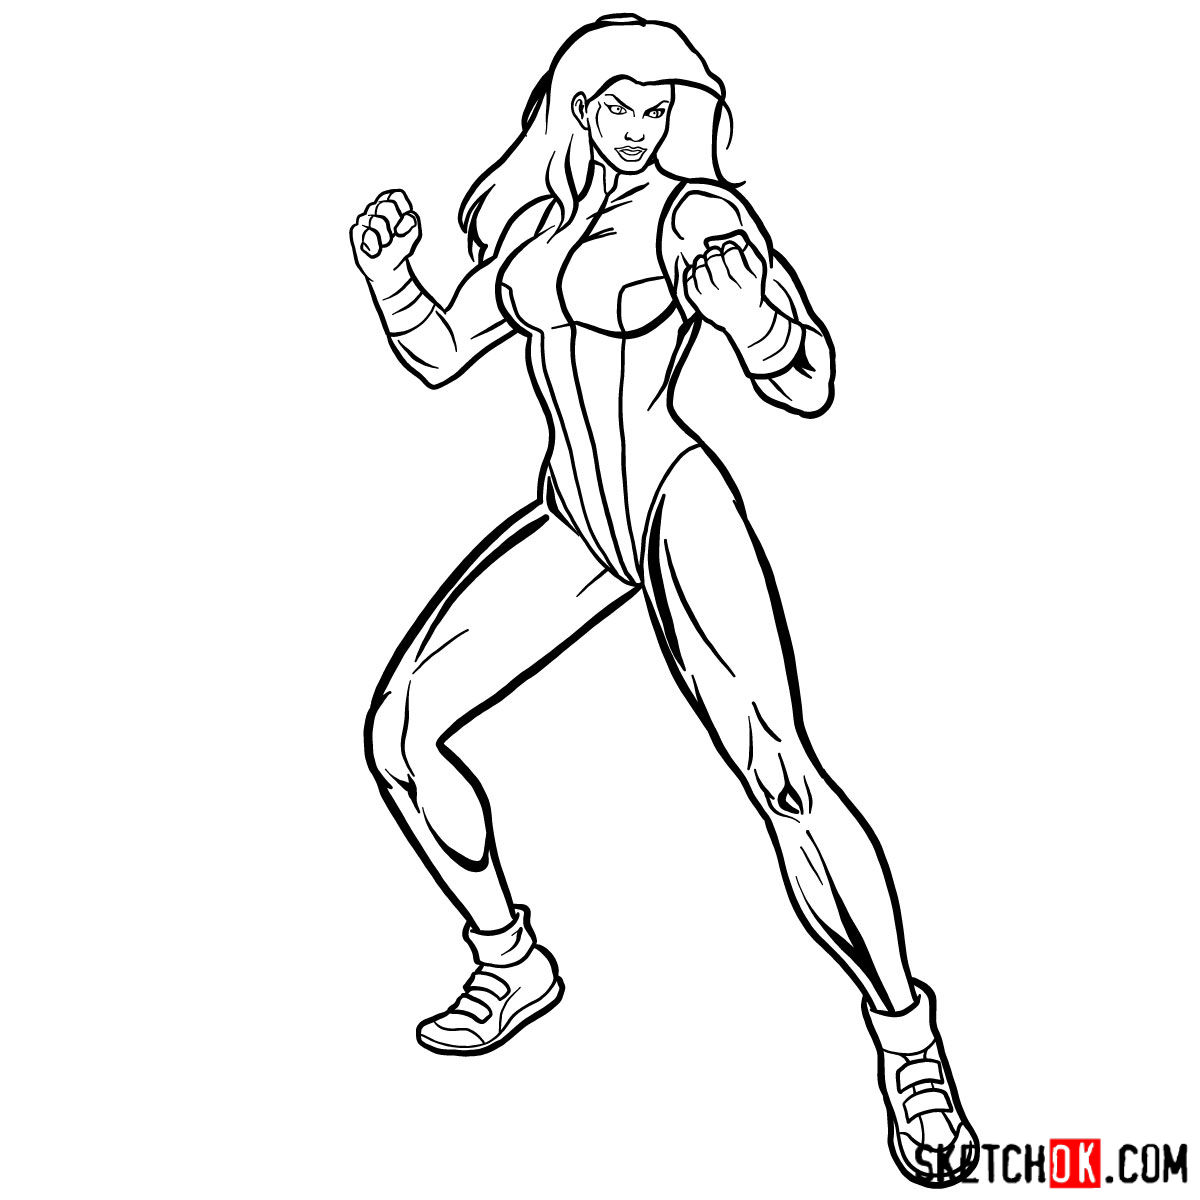 How to draw SheHulk (Jennifer Walters) from Marvel Sketchok easy